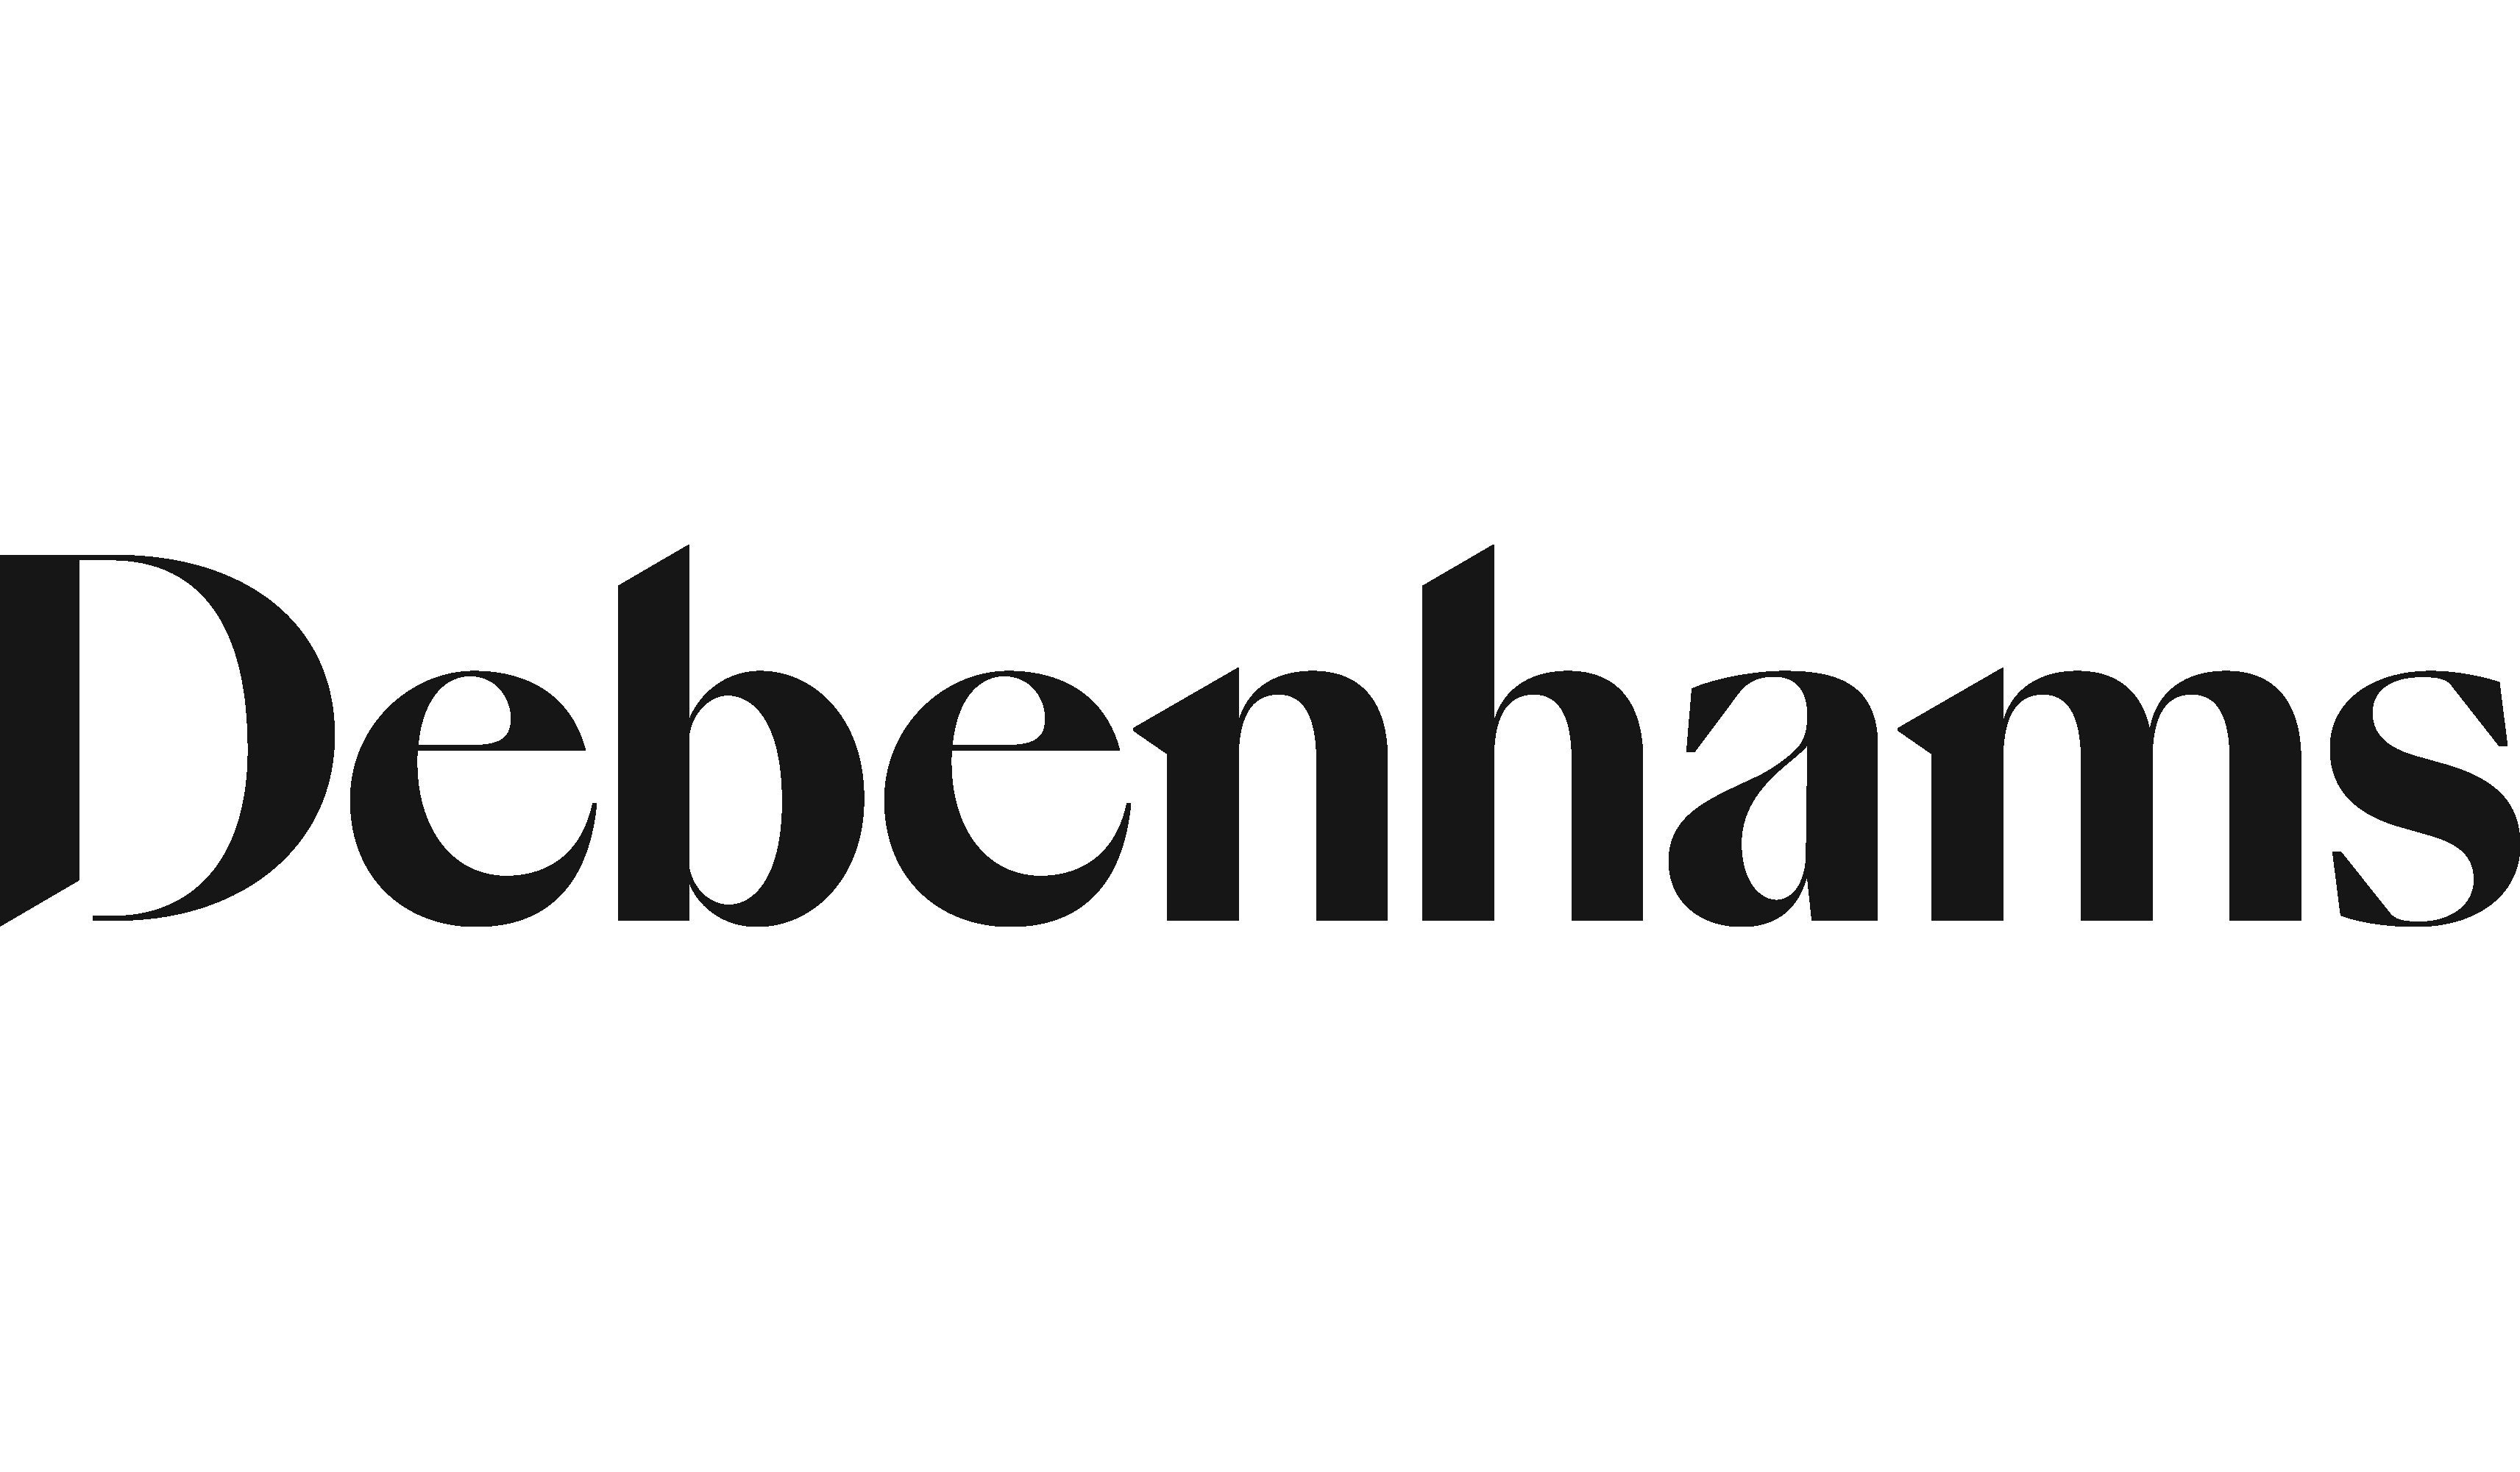 https://1000logos.net/wp-content/uploads/2020/10/Debenhams-logo.png